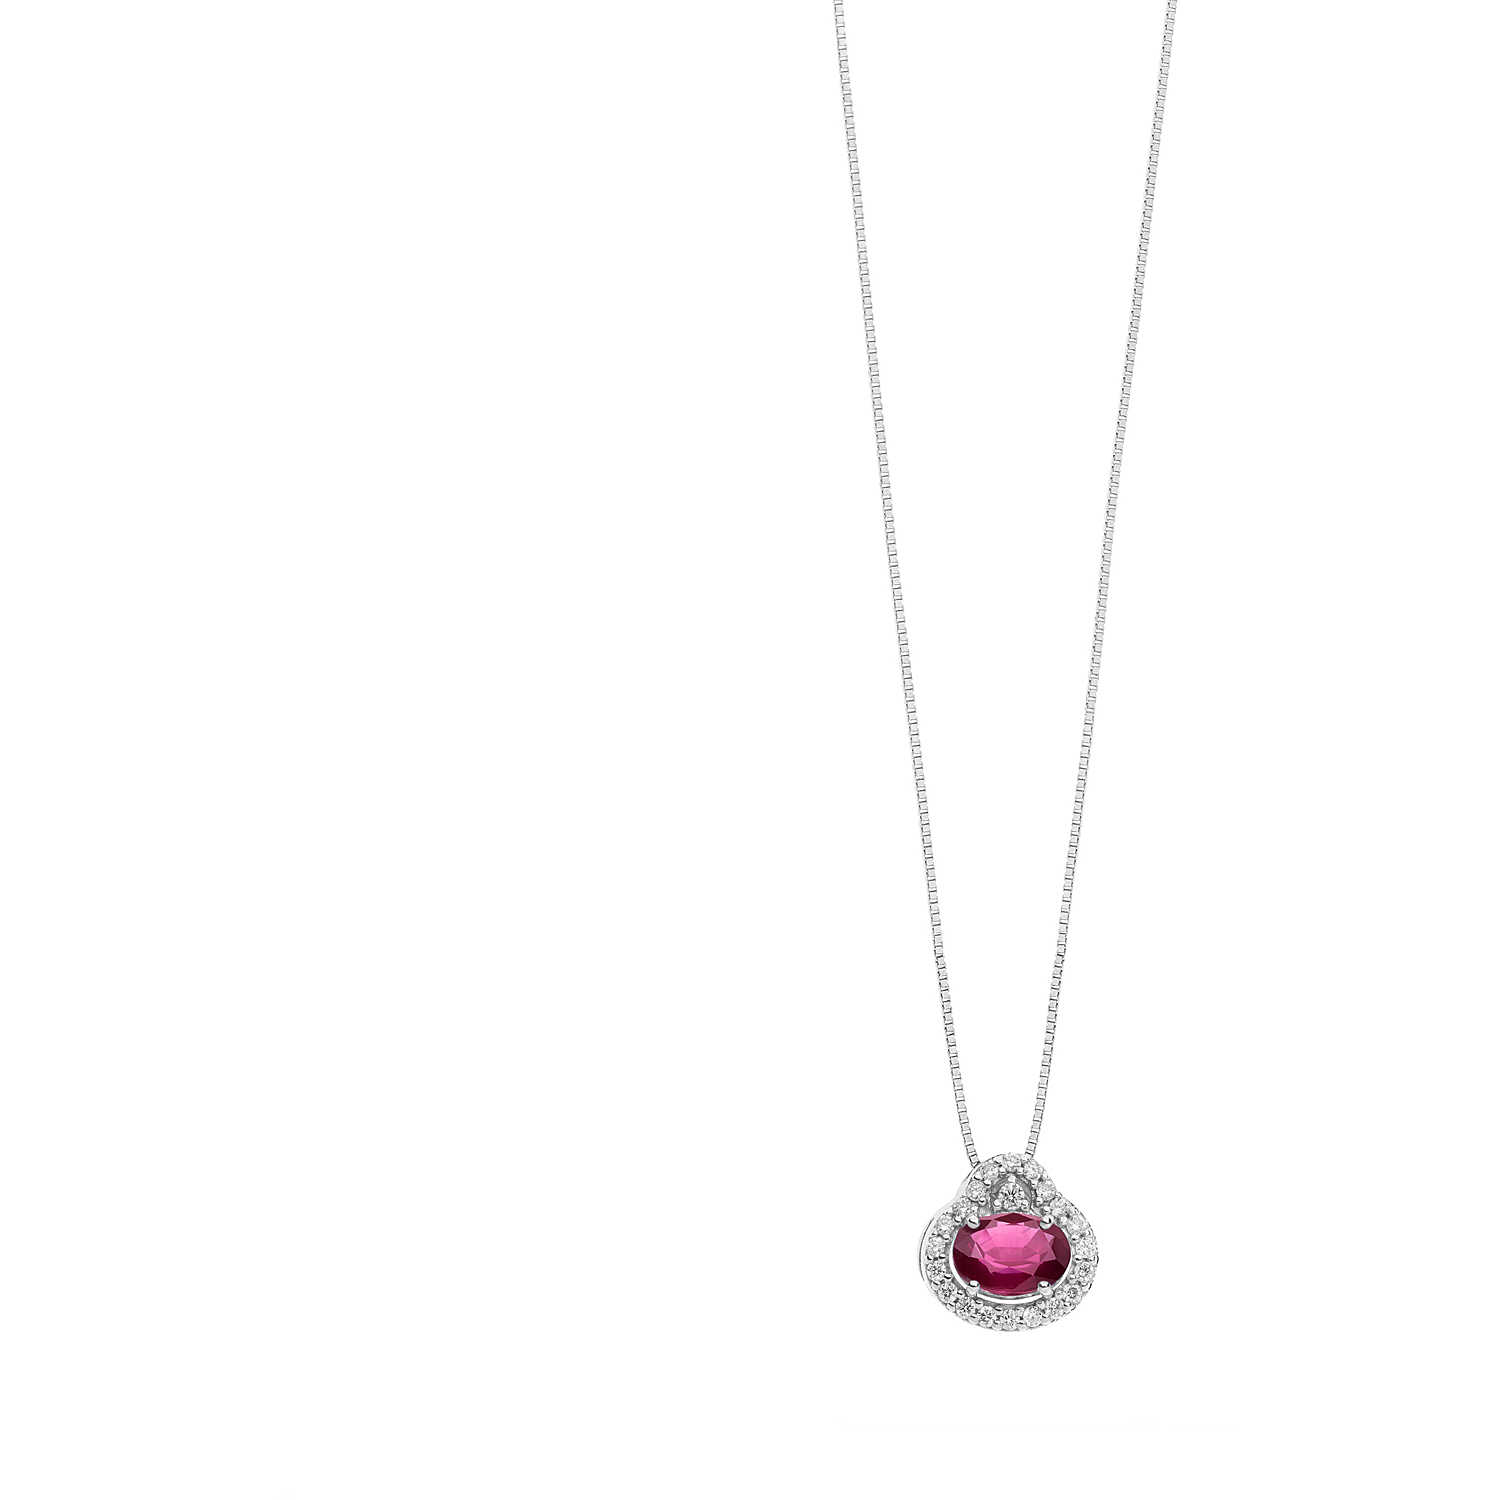 Orion GLB 1479 Women’s Jewelry Necklace